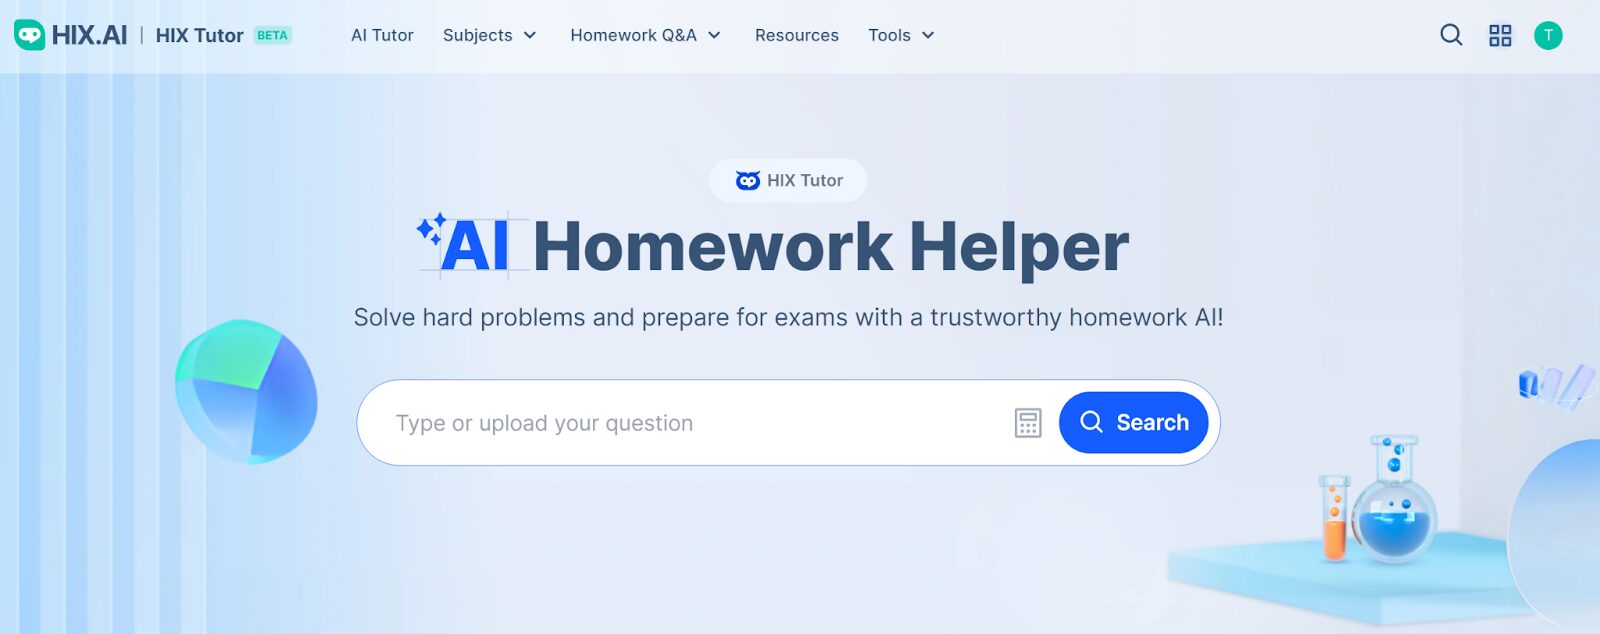 HIX Tutor Review: A Trustworthy Homework AI Tool